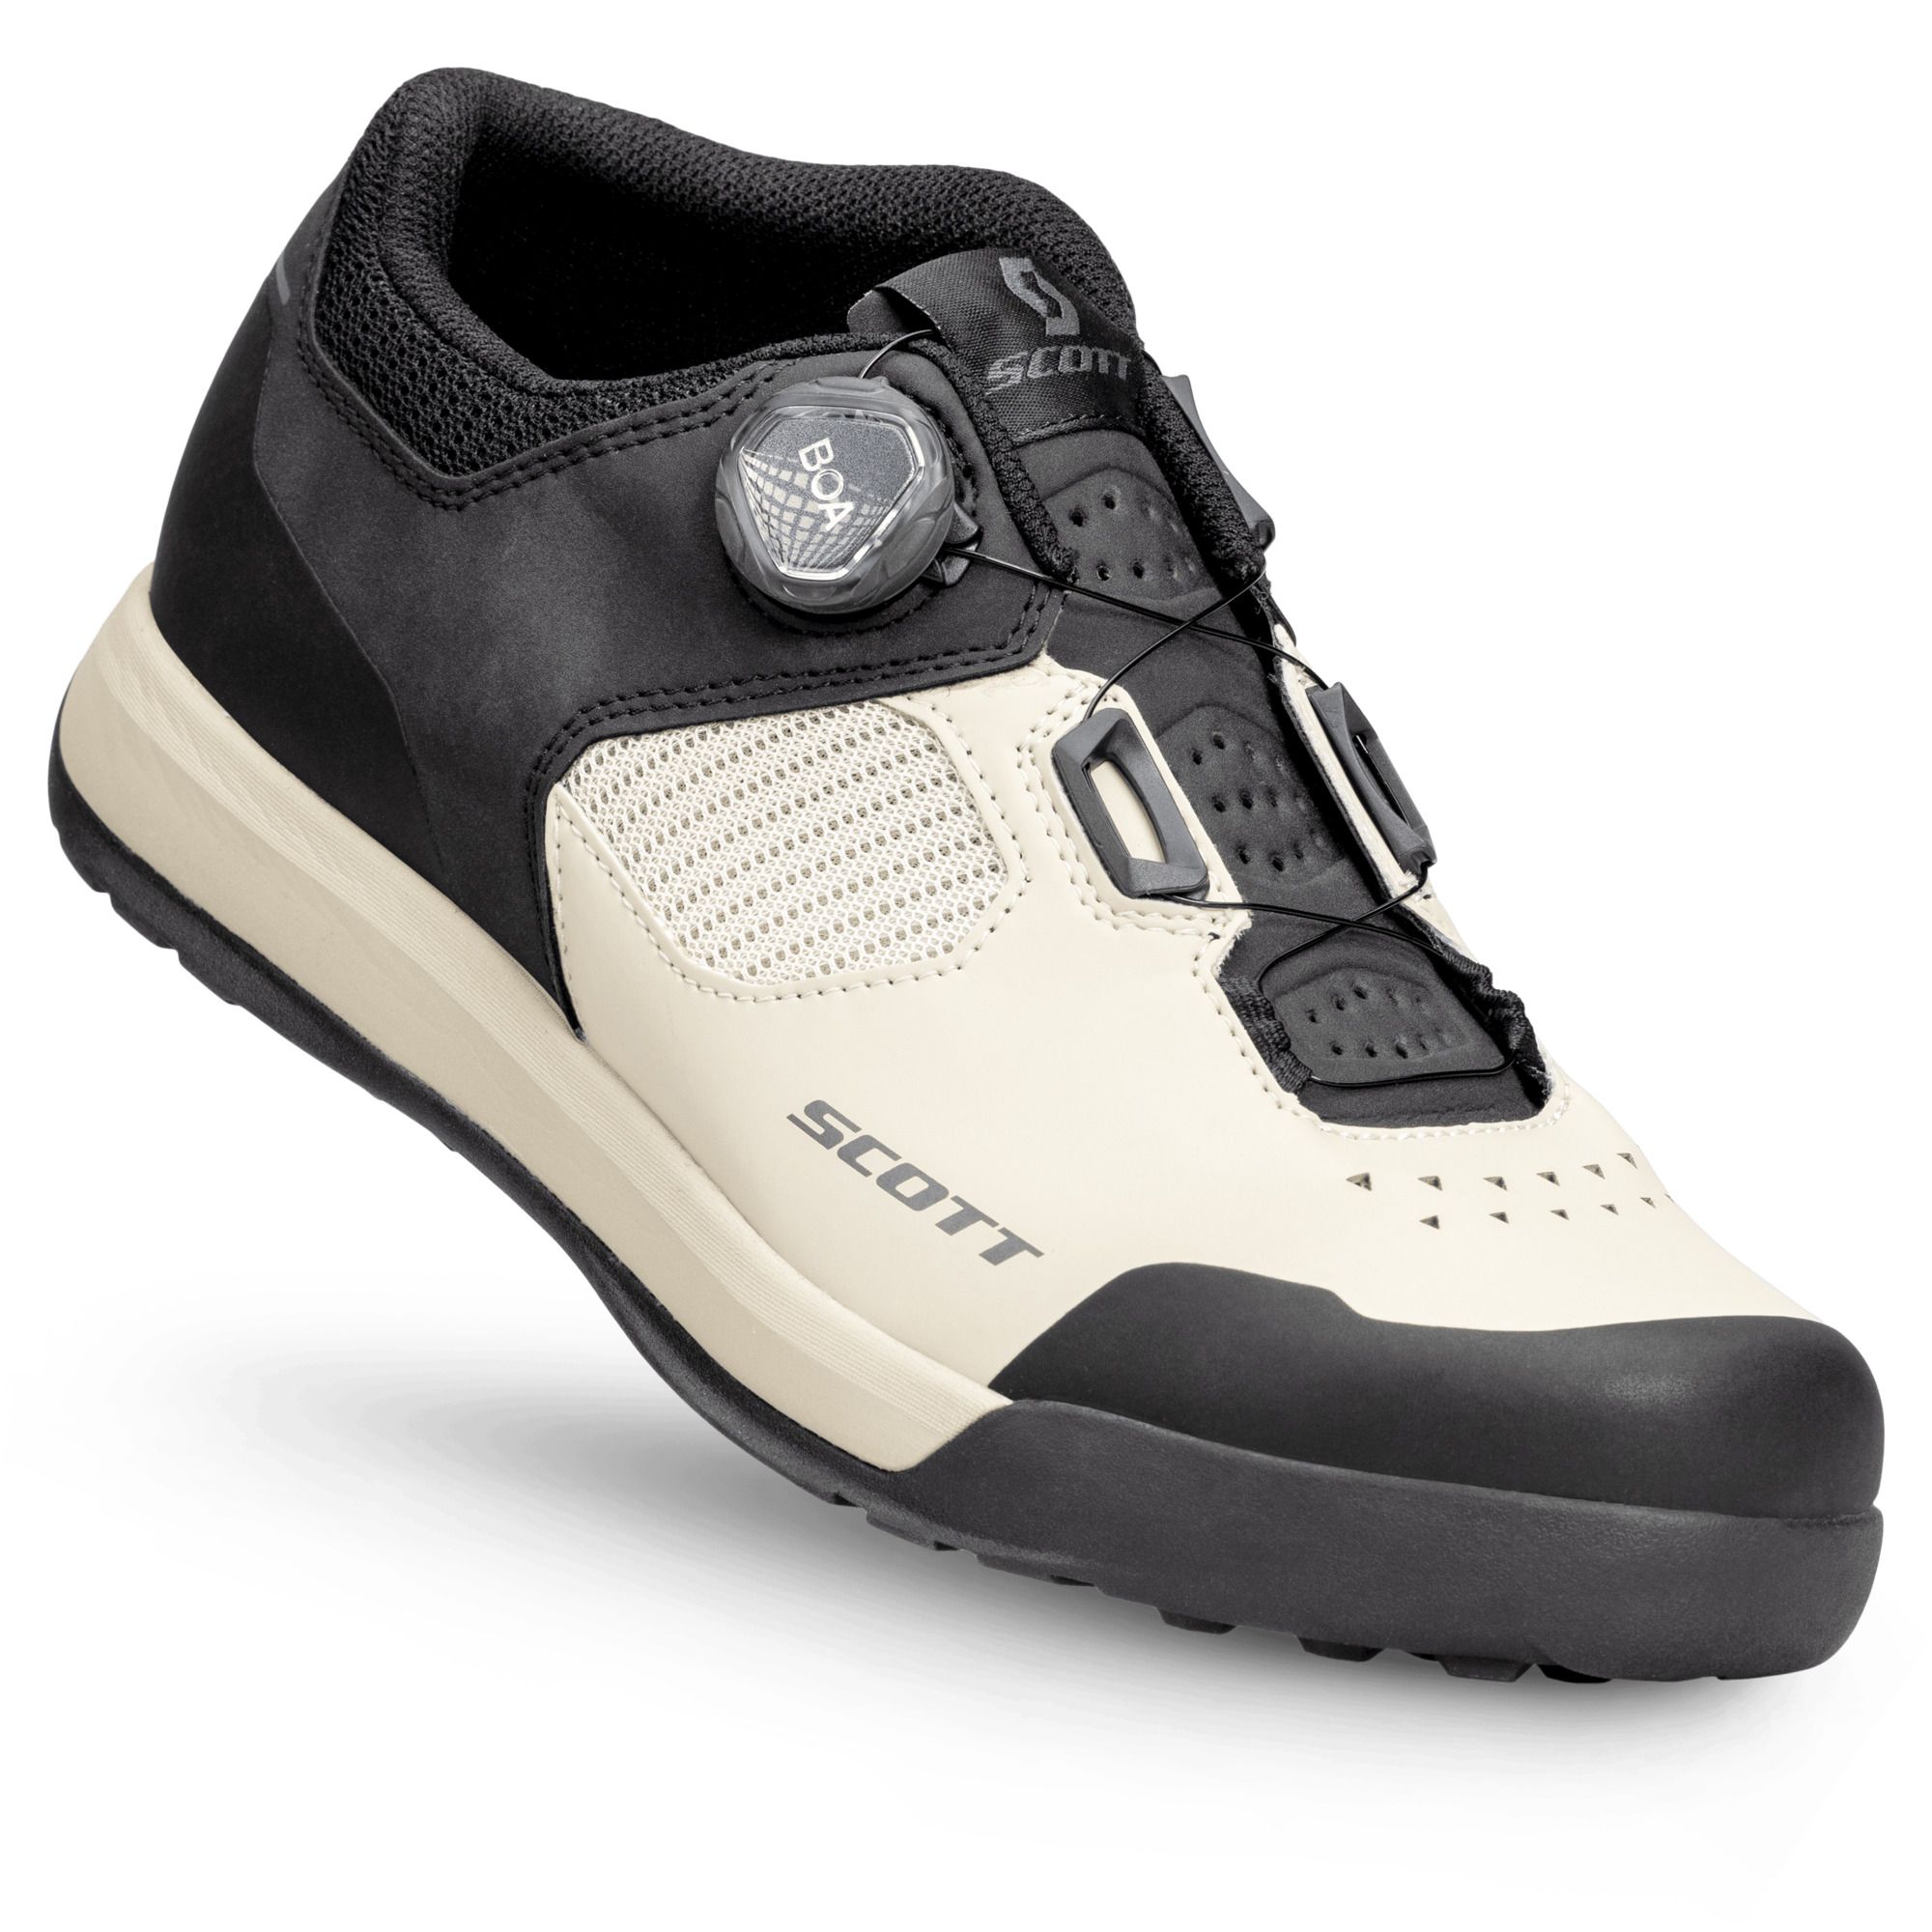 Productfoto van SCOTT MTB Shr-alp Boa EVO Fietsschoenen - zwart/beige